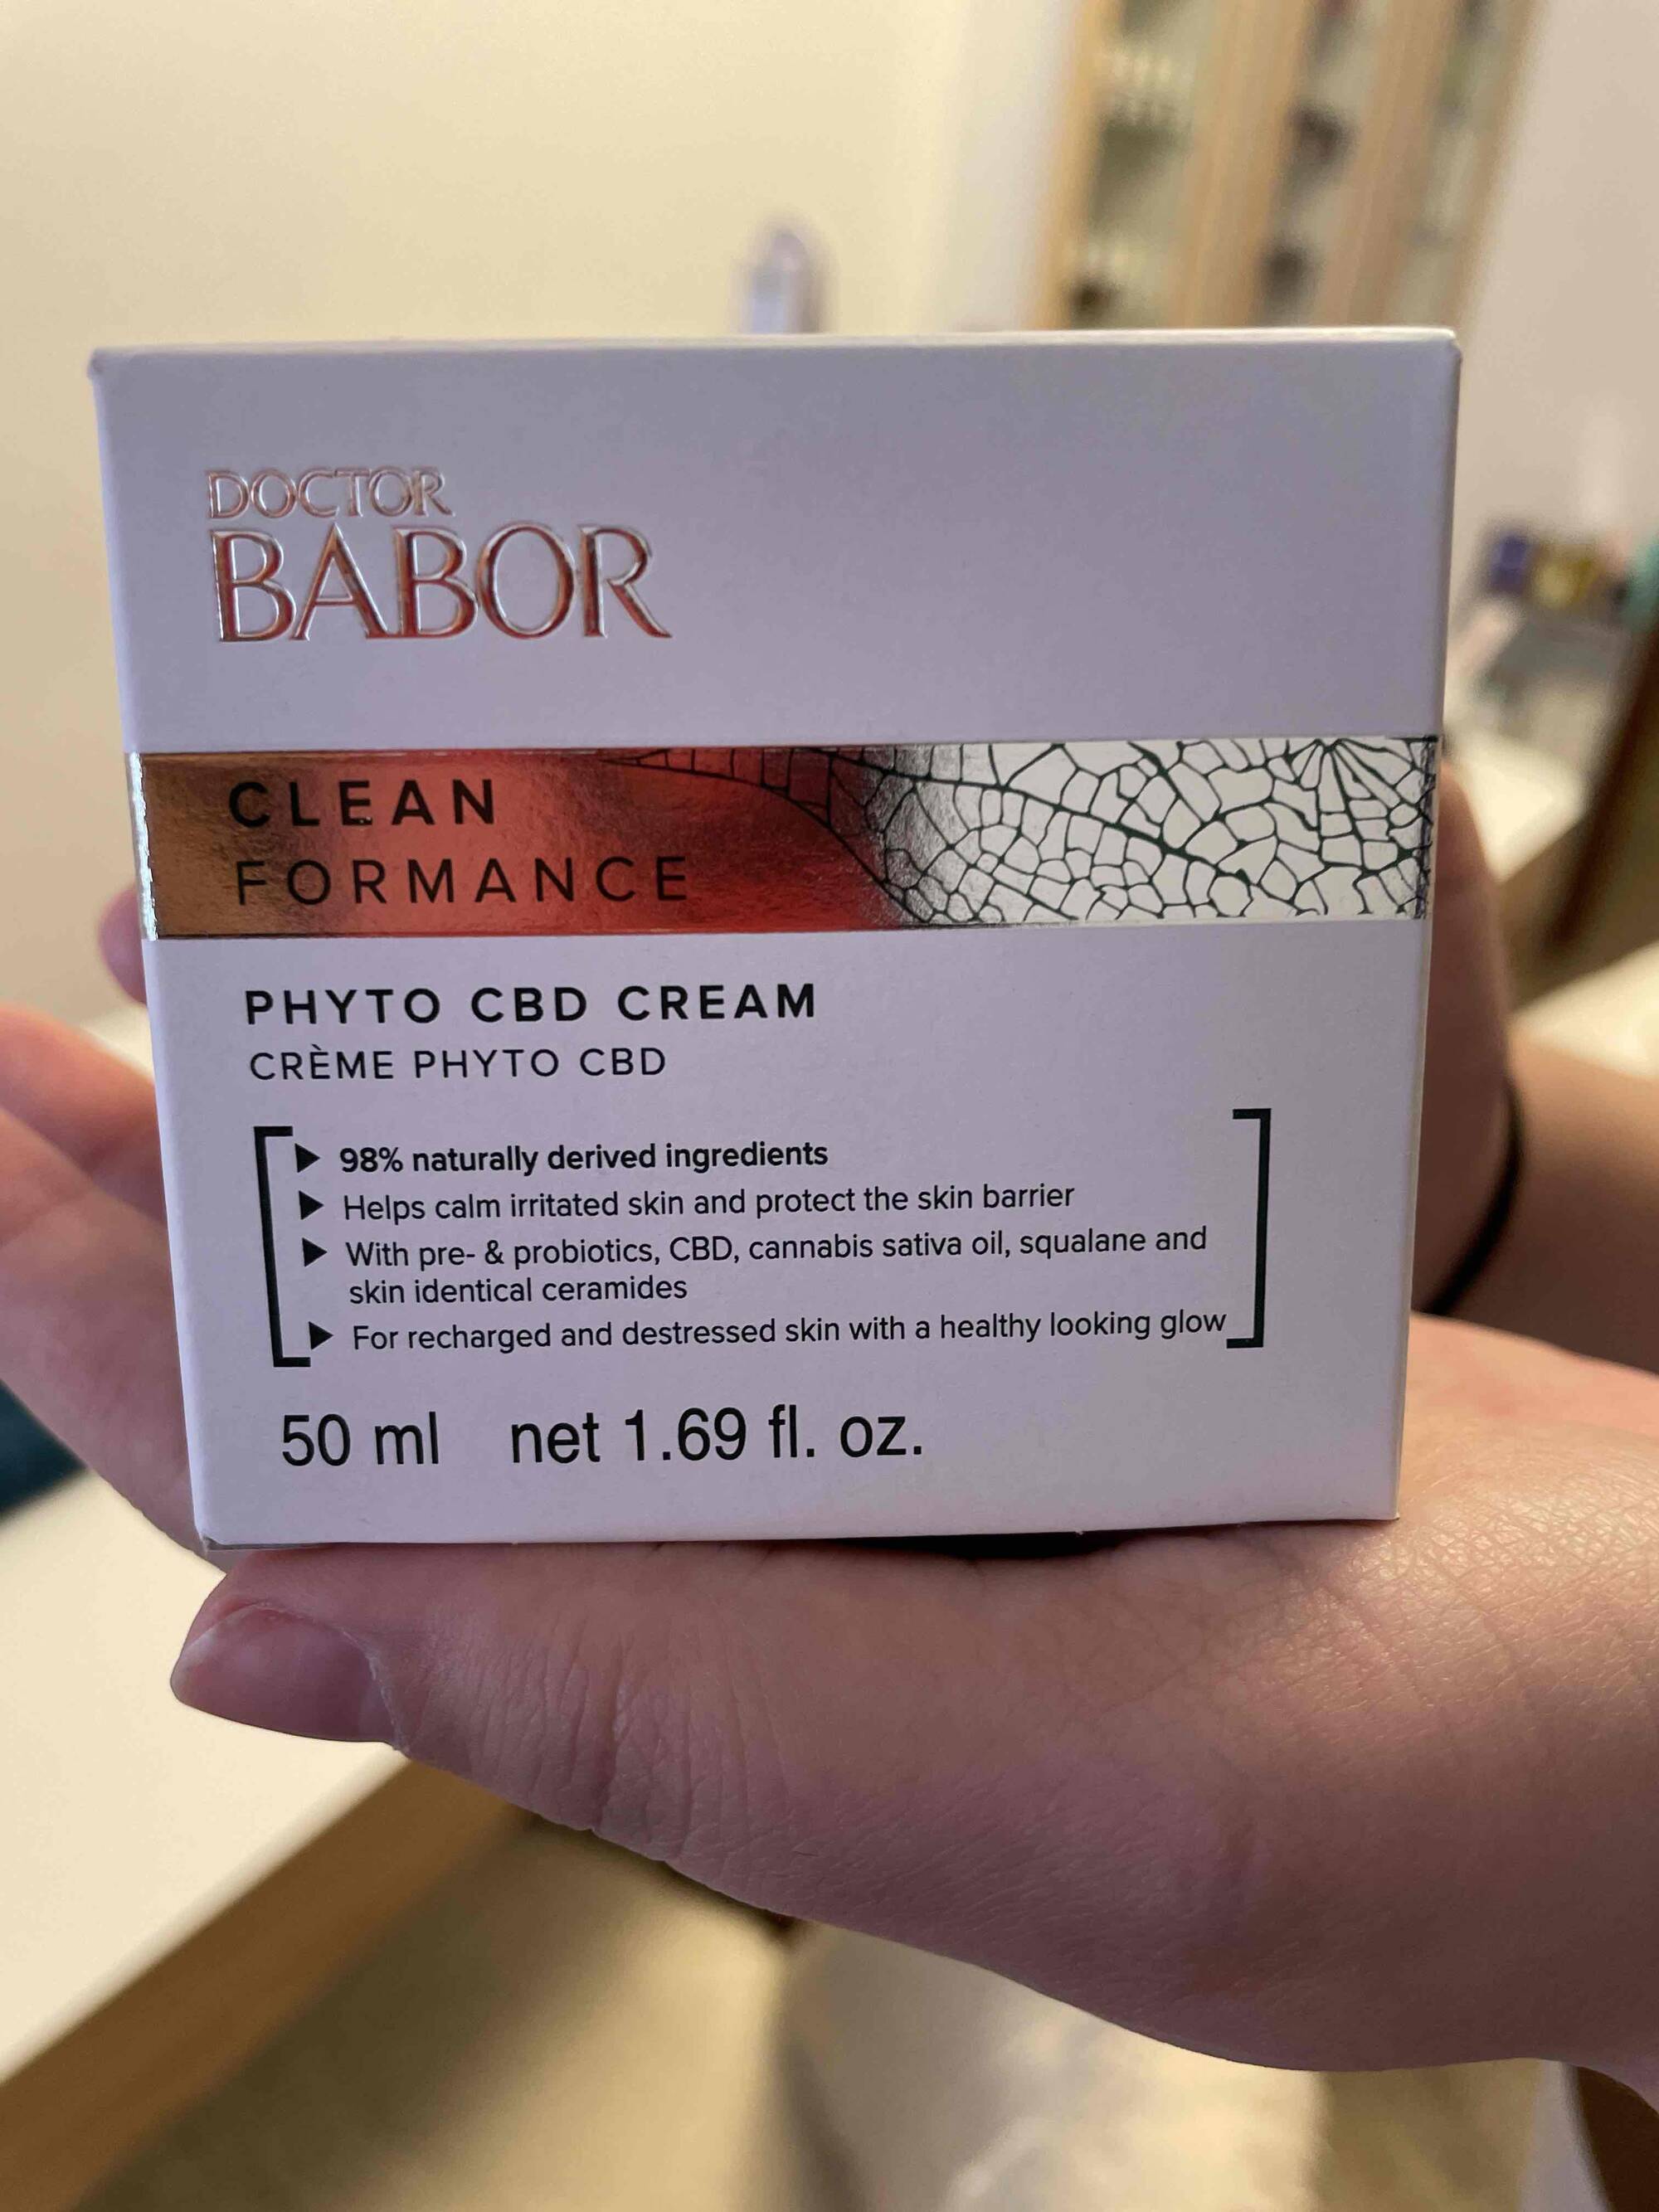 DOCTOR BABOR - Clean formance - Crème phyto cbd